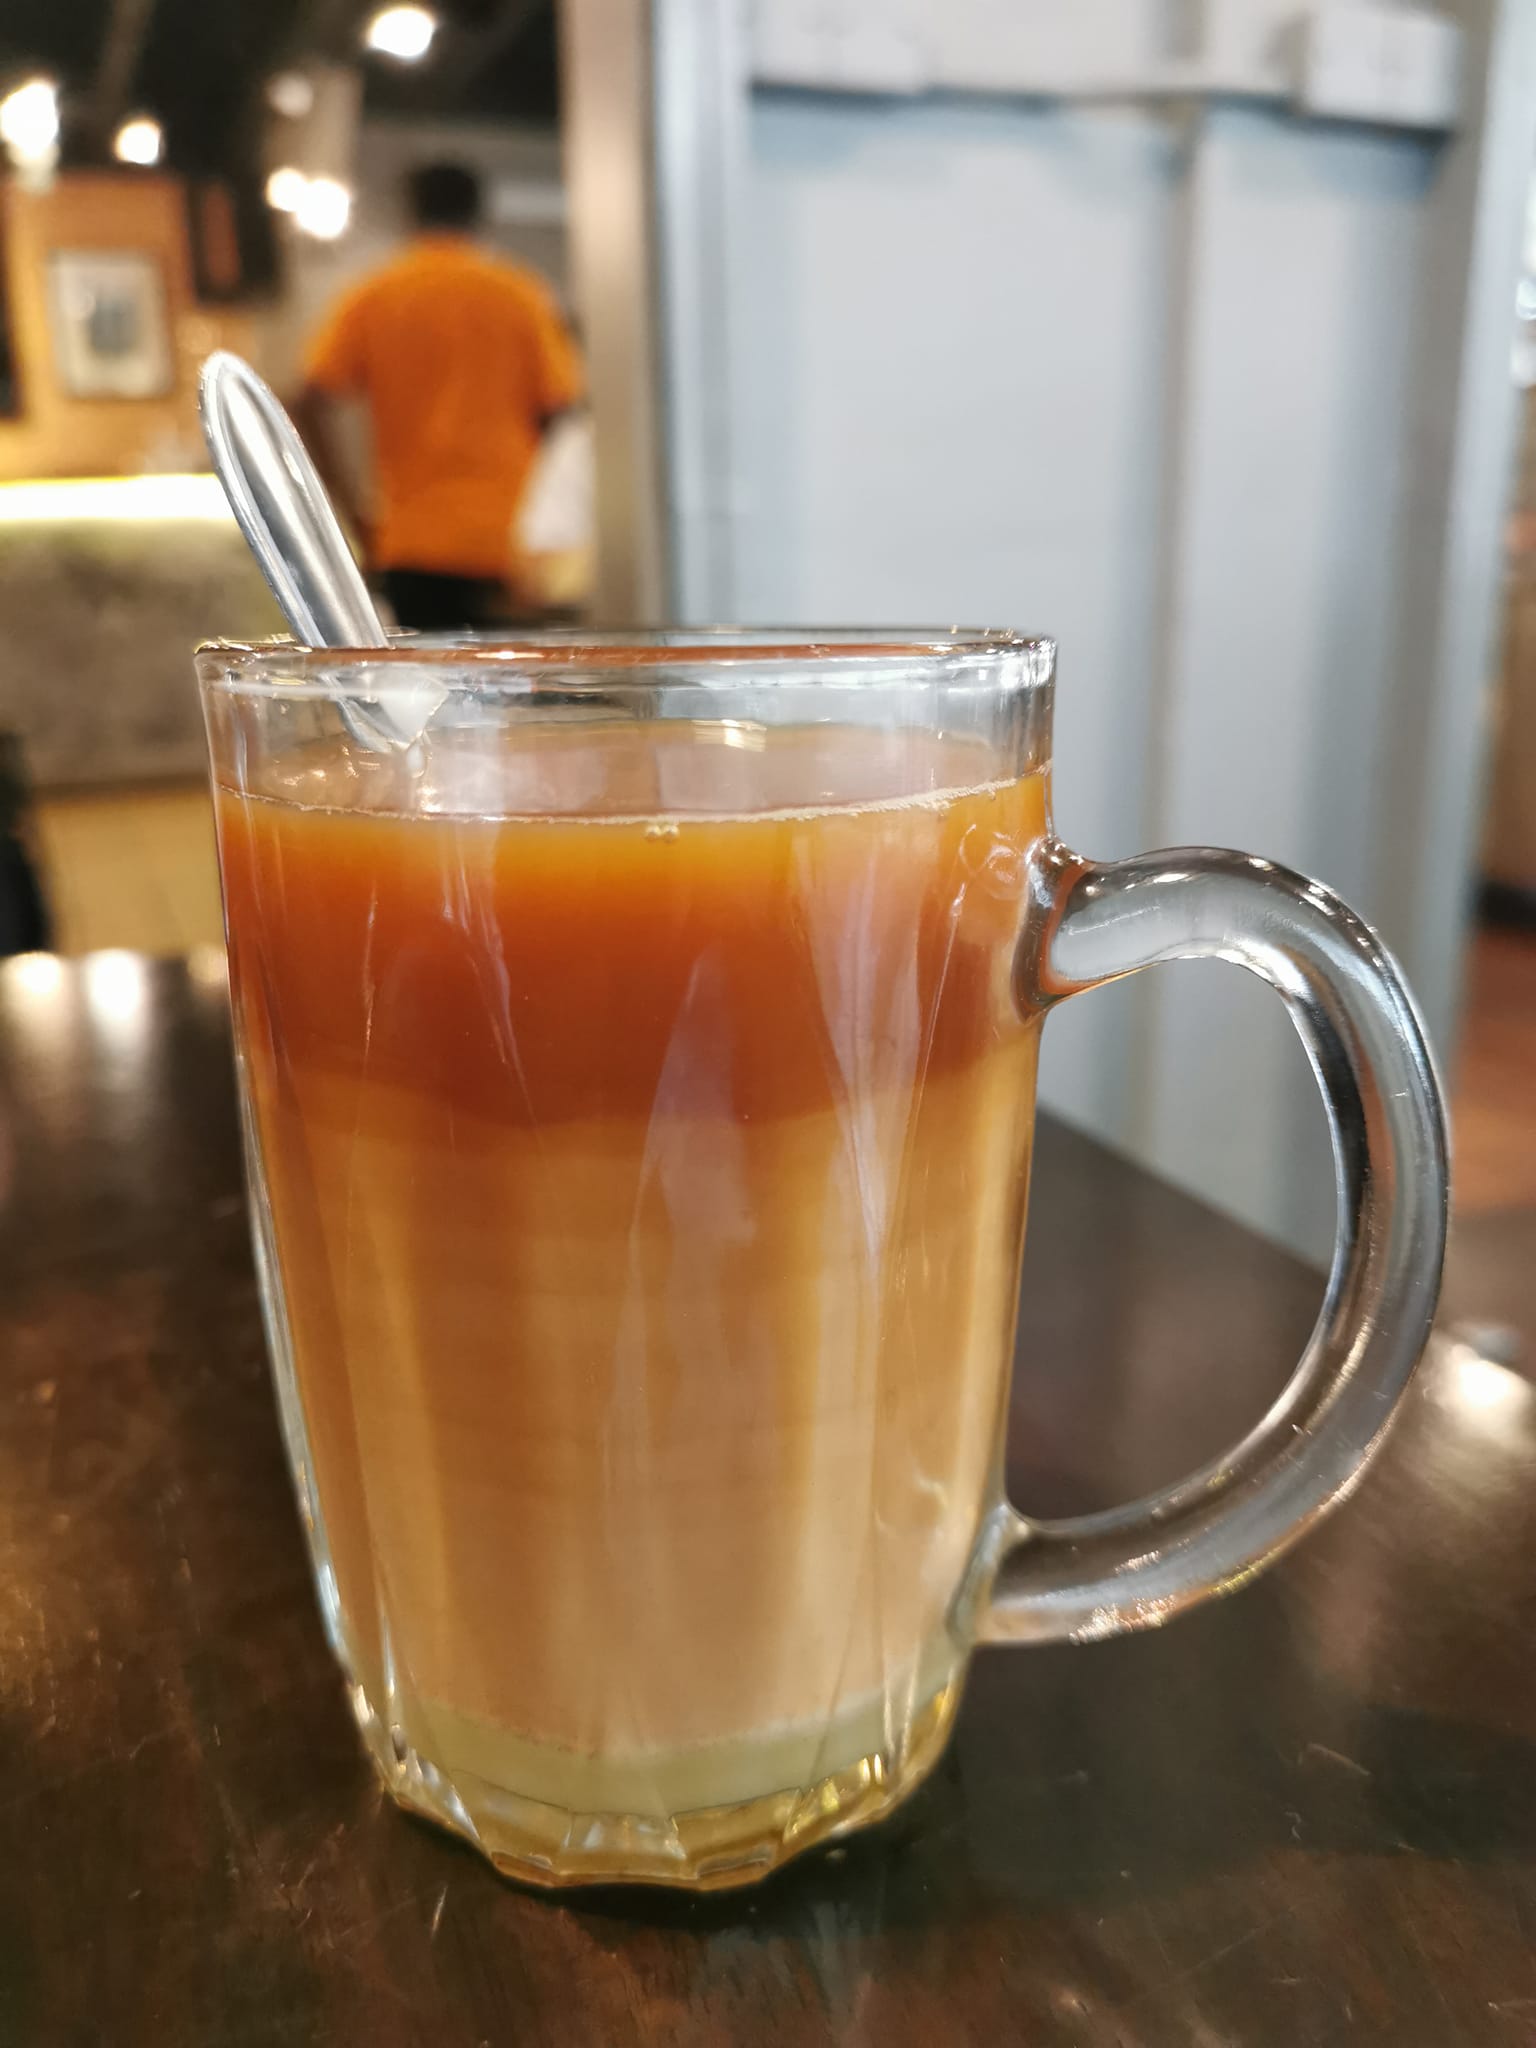 Gula Melaka Cafe